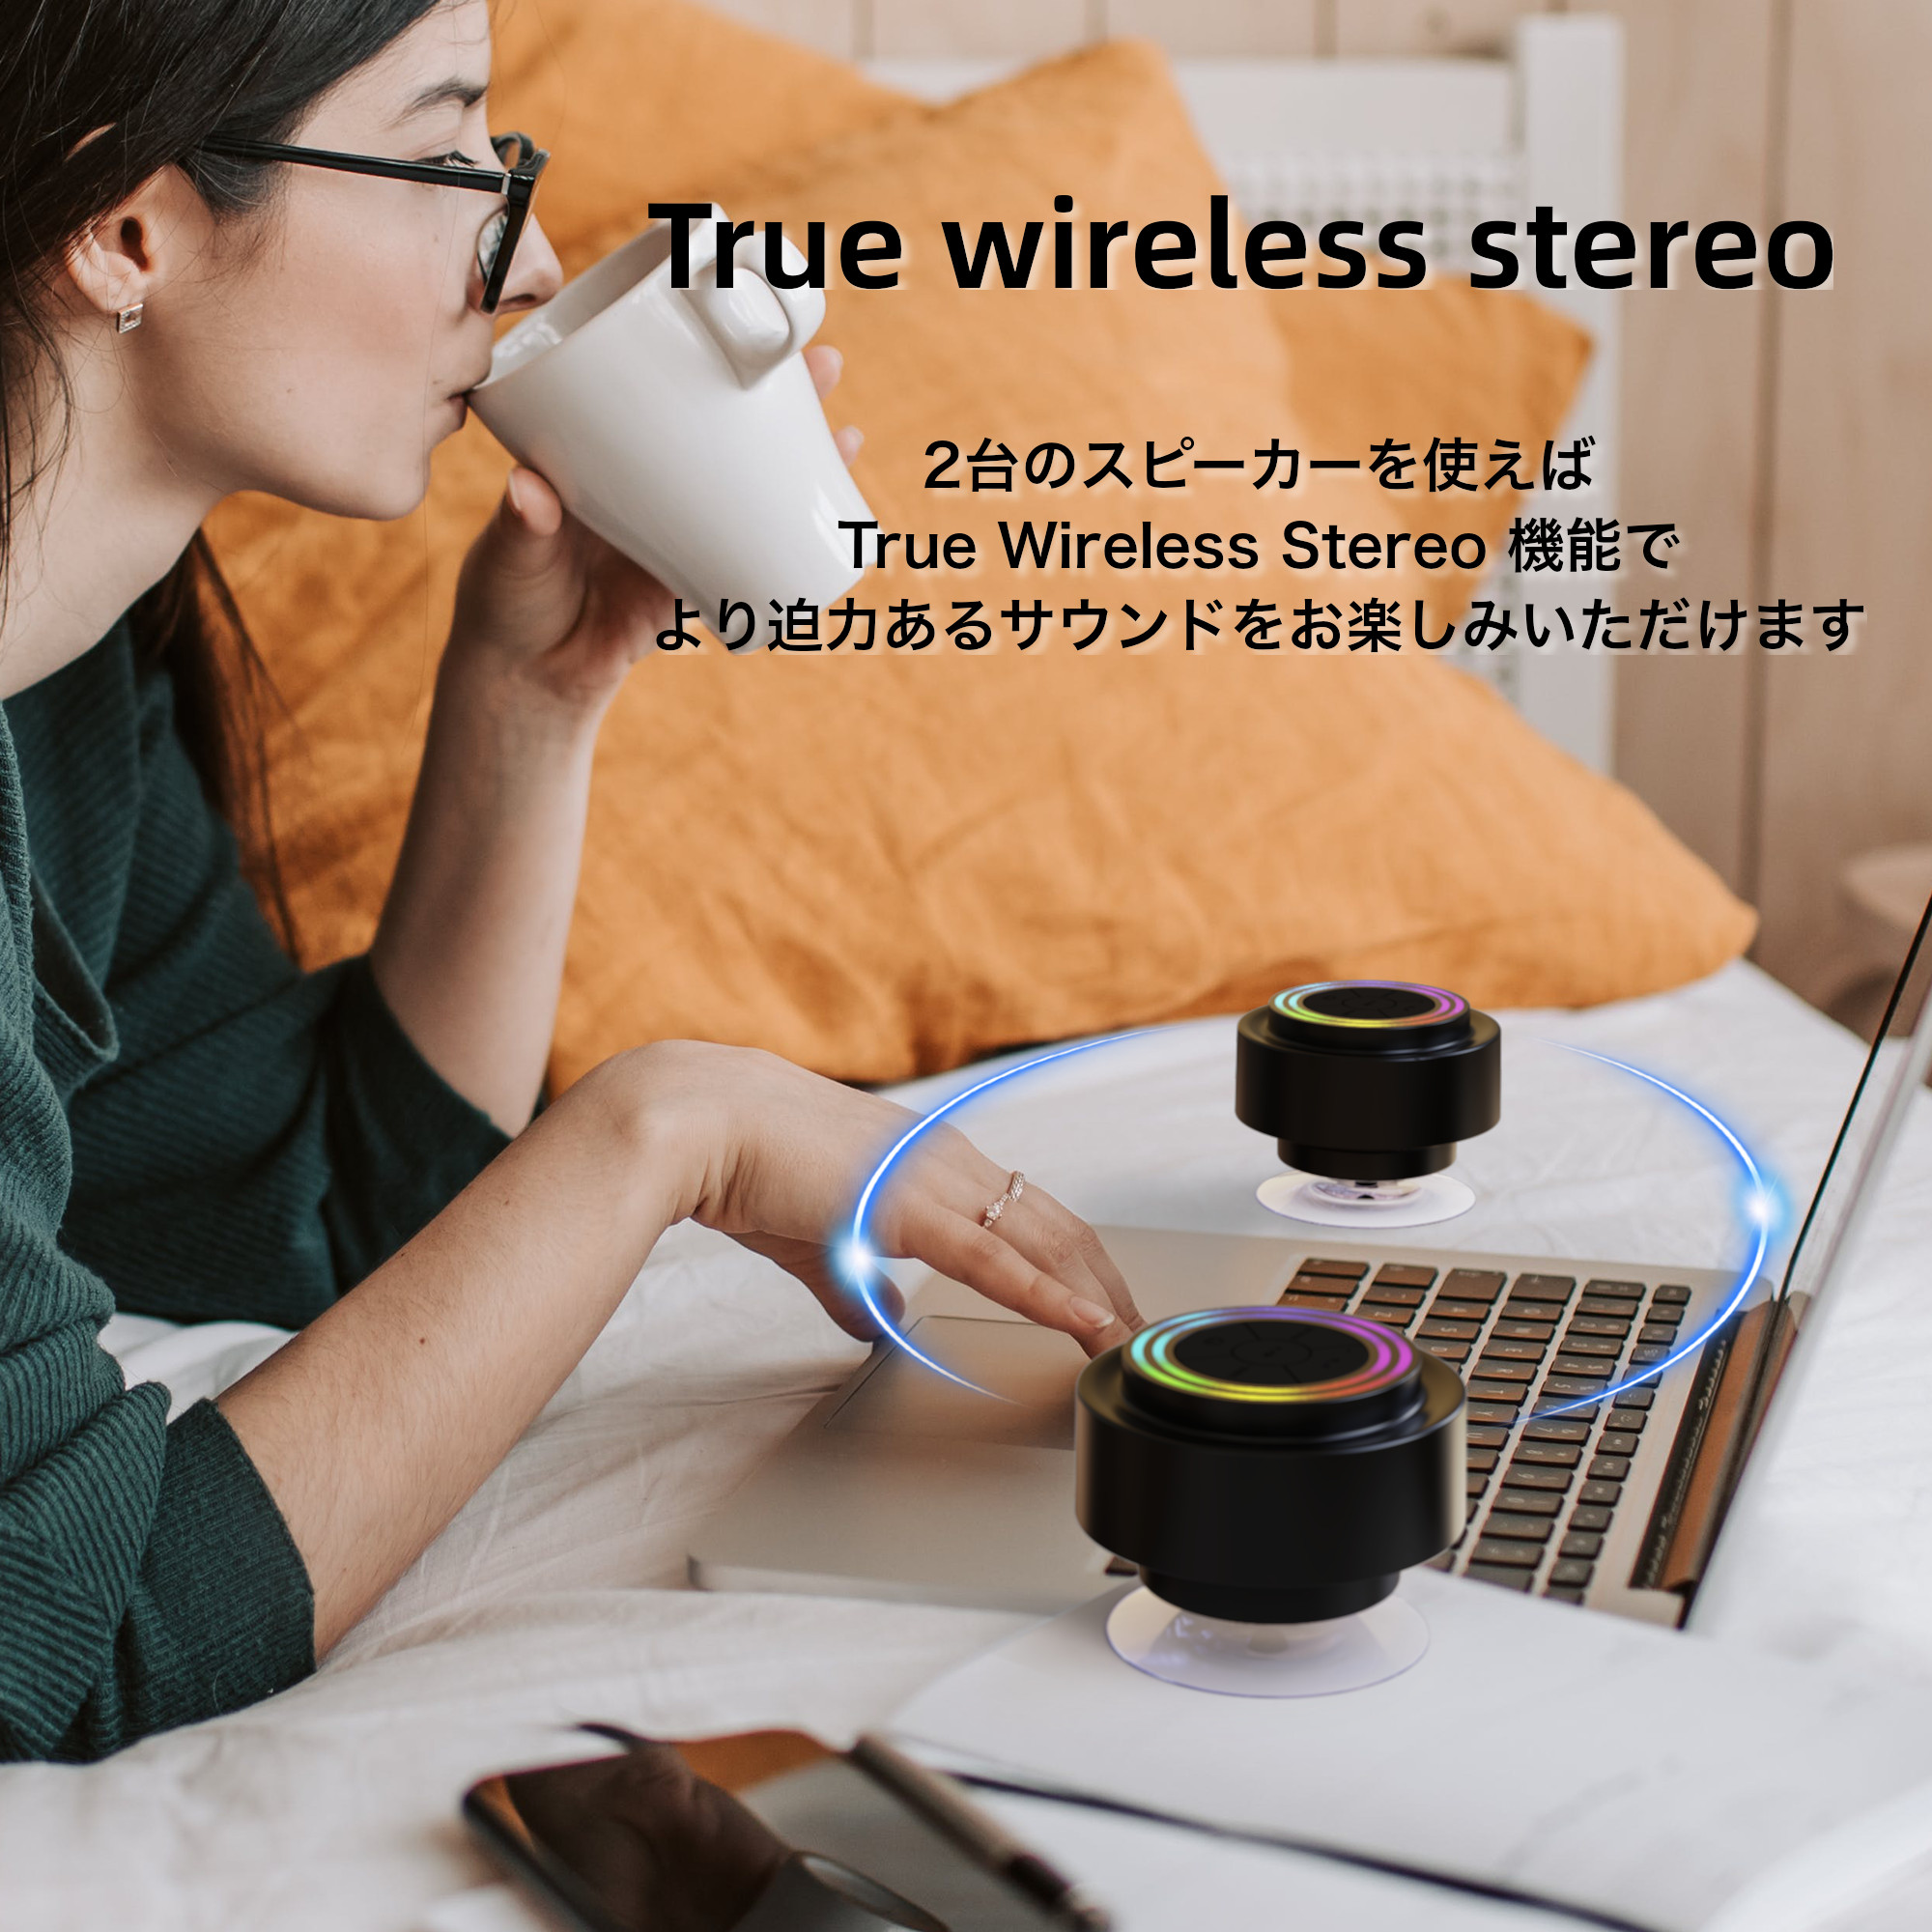 True Wireless Stereo